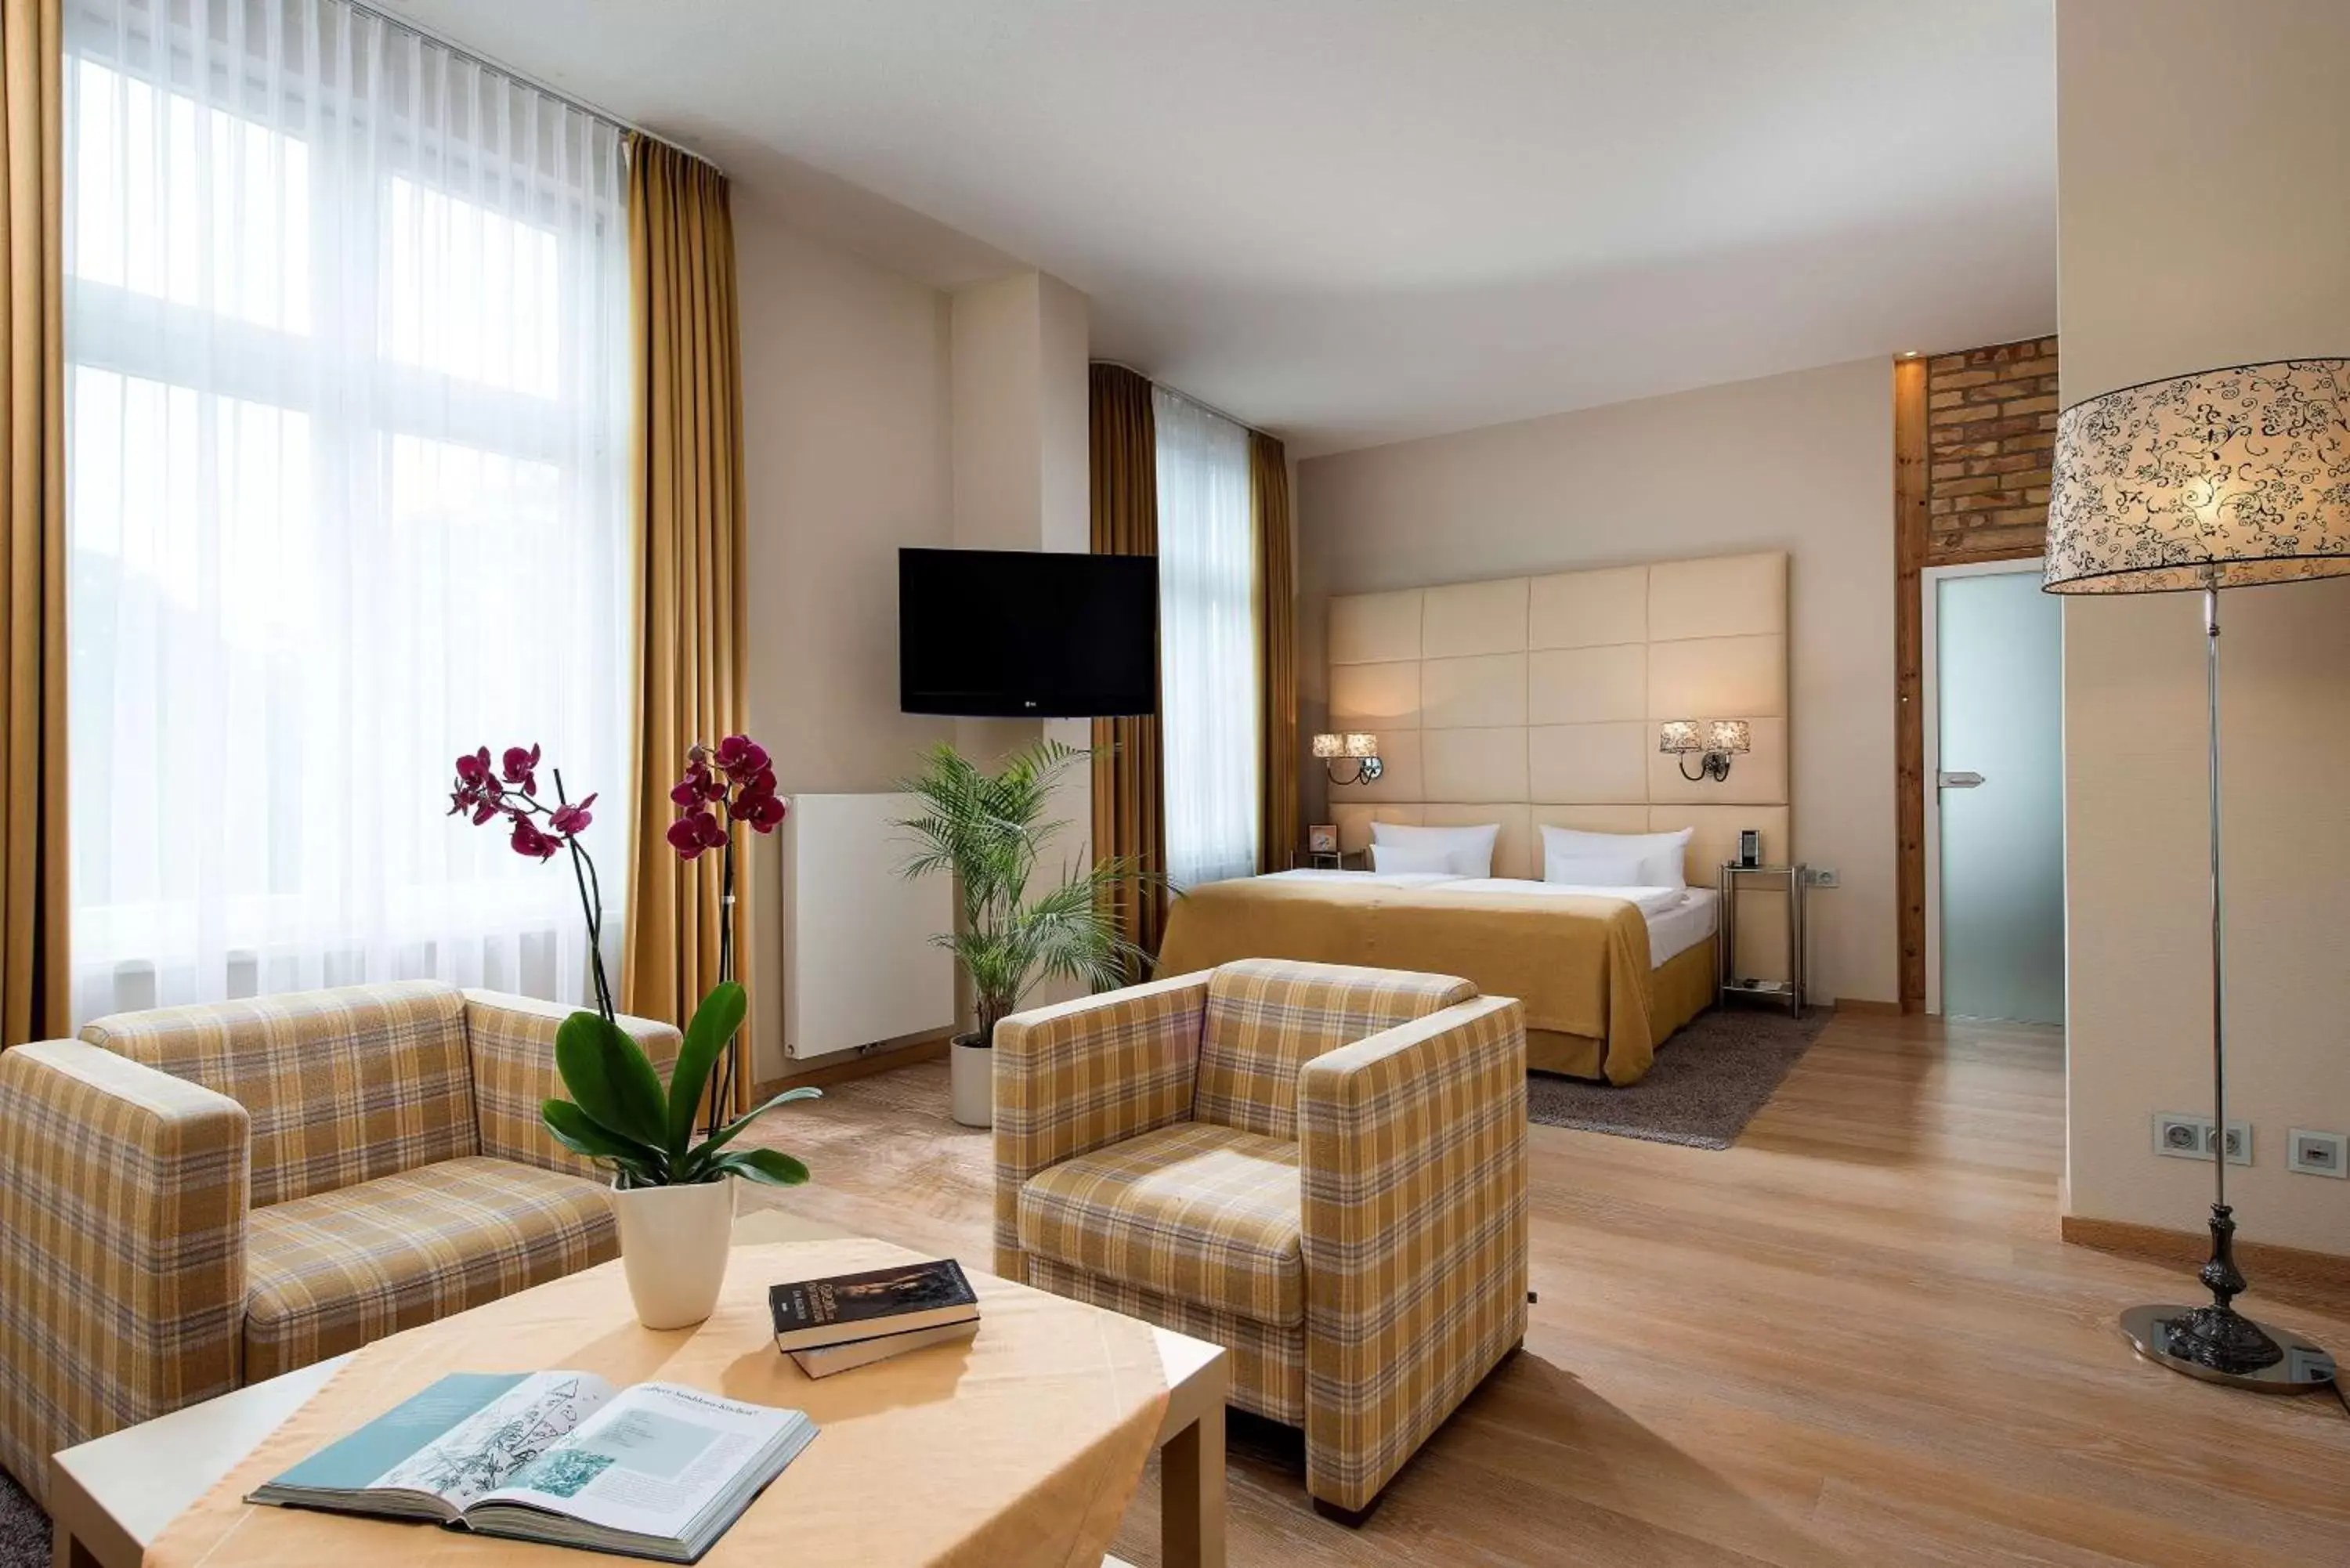 Photo of the whole room, Seating Area in Best Western Plus Ostseehotel Waldschloesschen